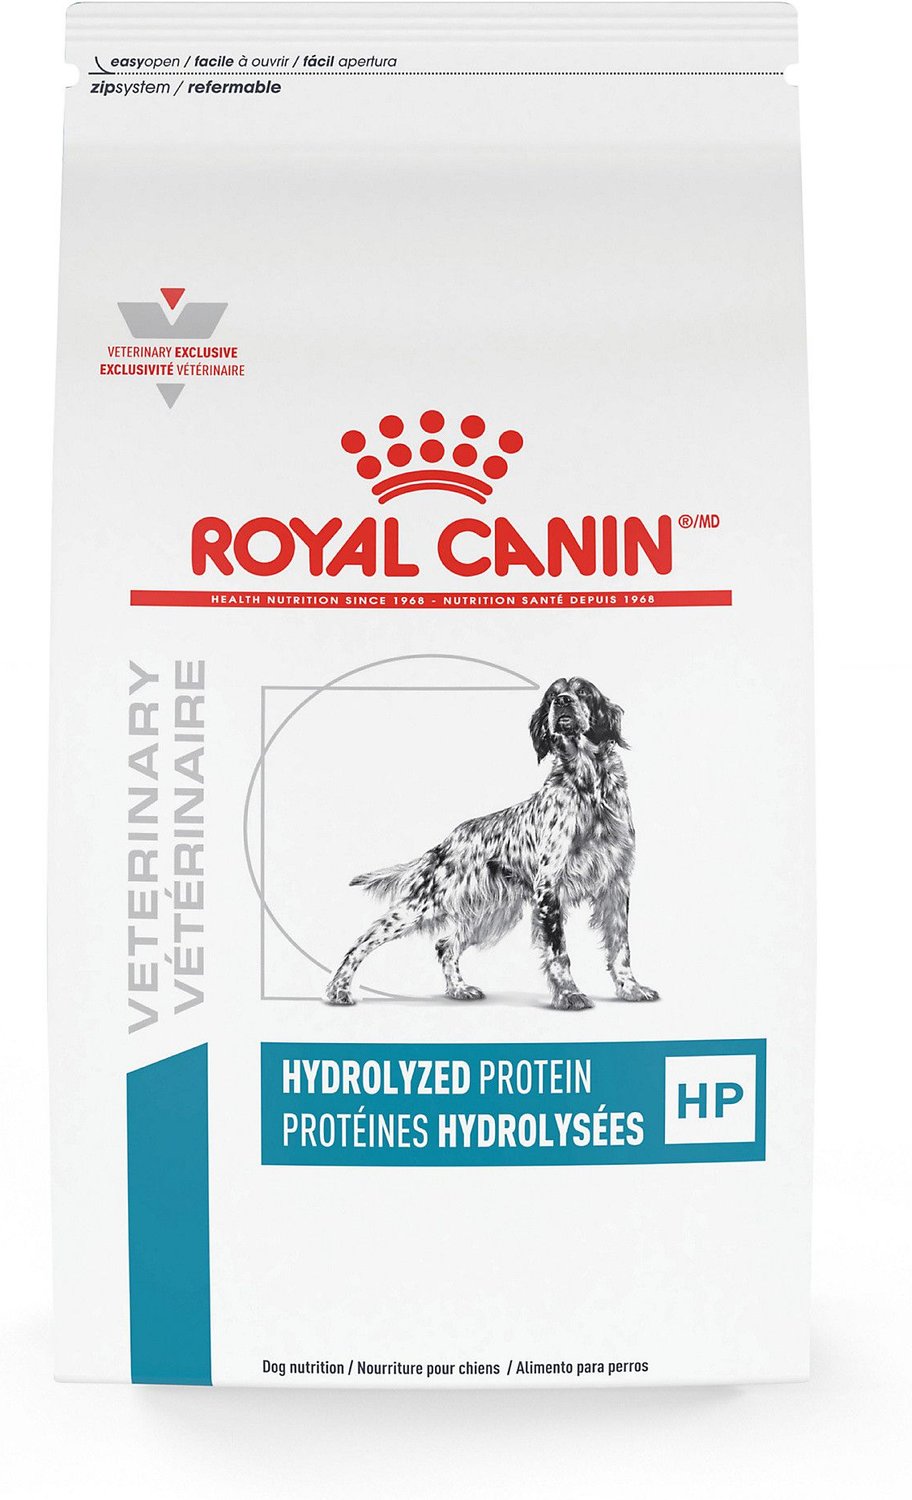 Royal Canin Dog Food Chart